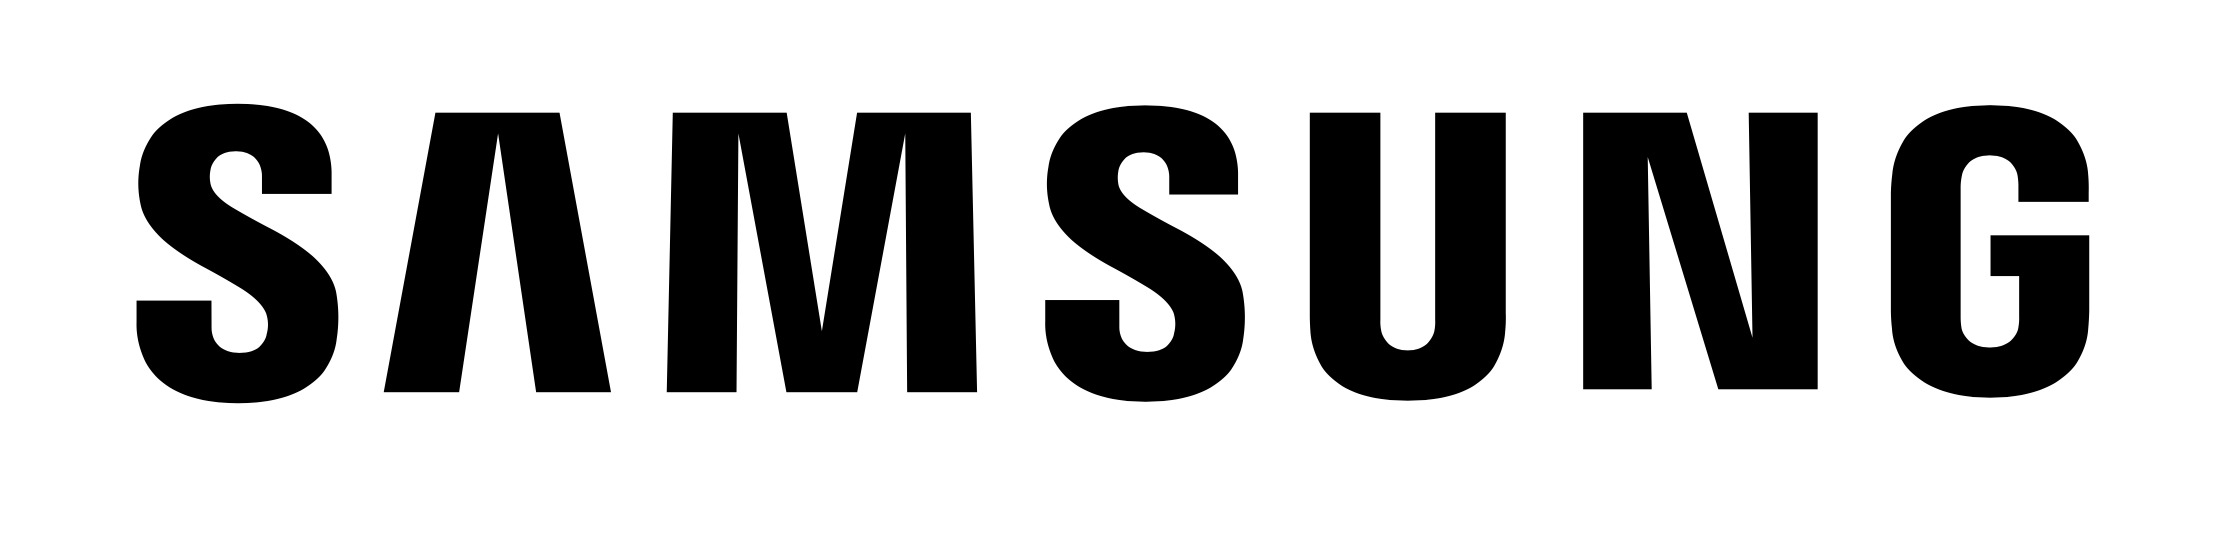 logo SAMSUNG